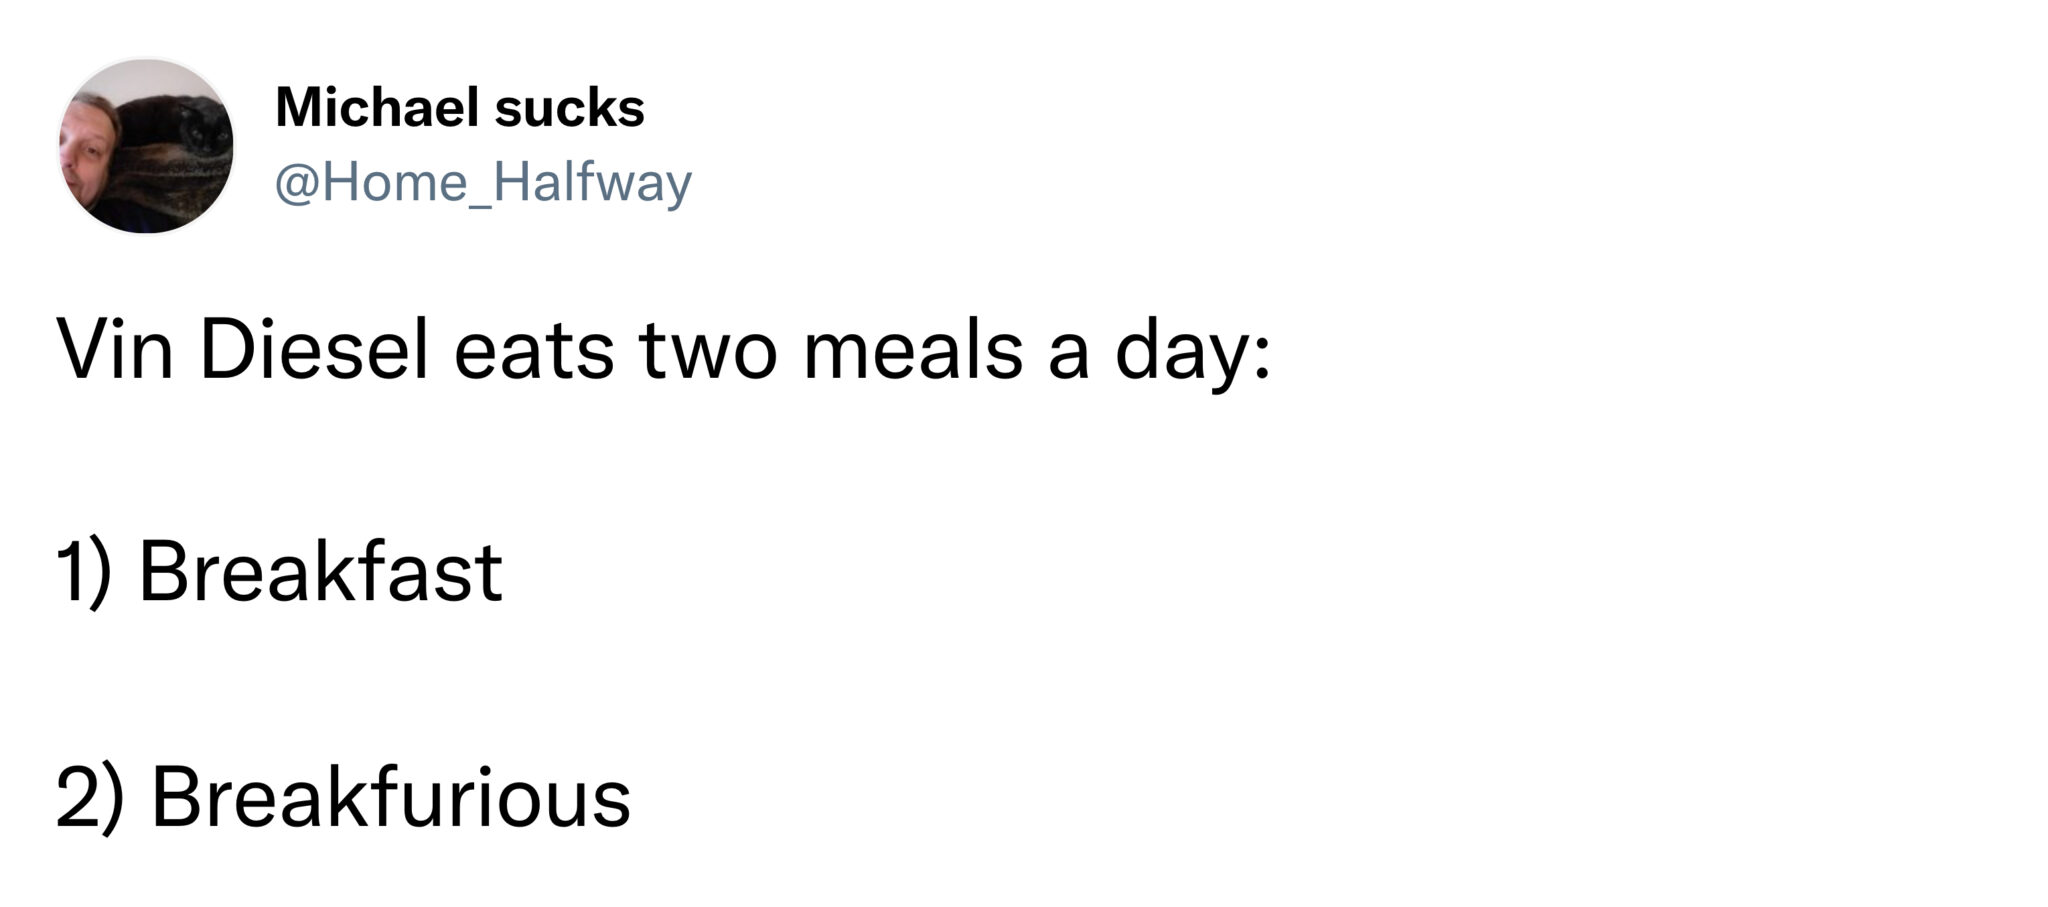 funny tweets - angle - Michael sucks Vin Diesel eats two meals a day 1 Breakfast 2 Breakfurious